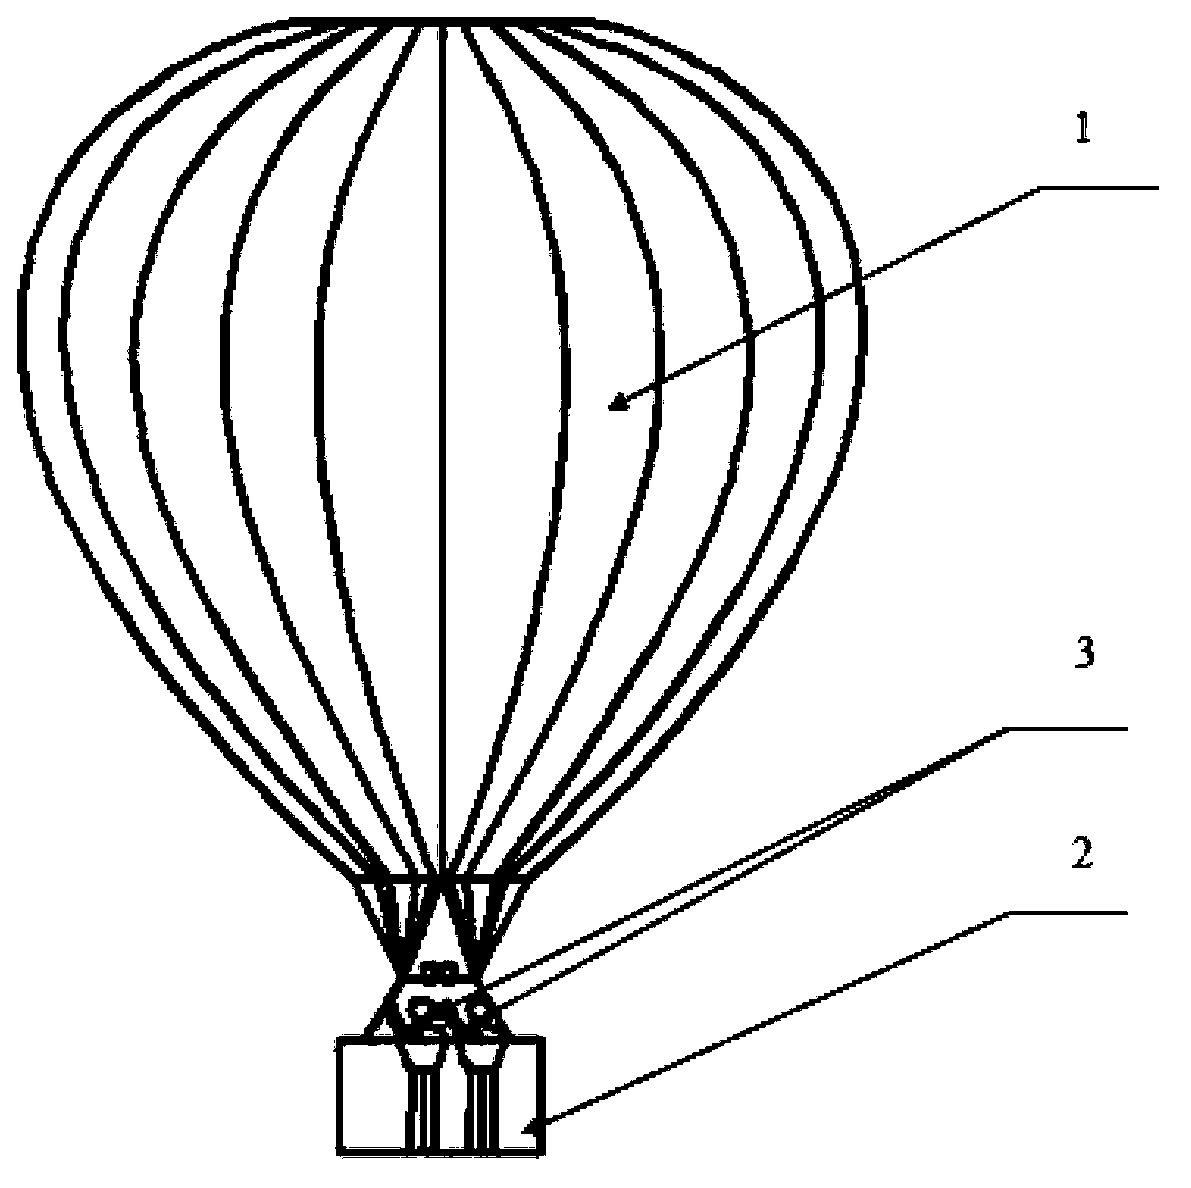 Fire balloon airdrop test platform